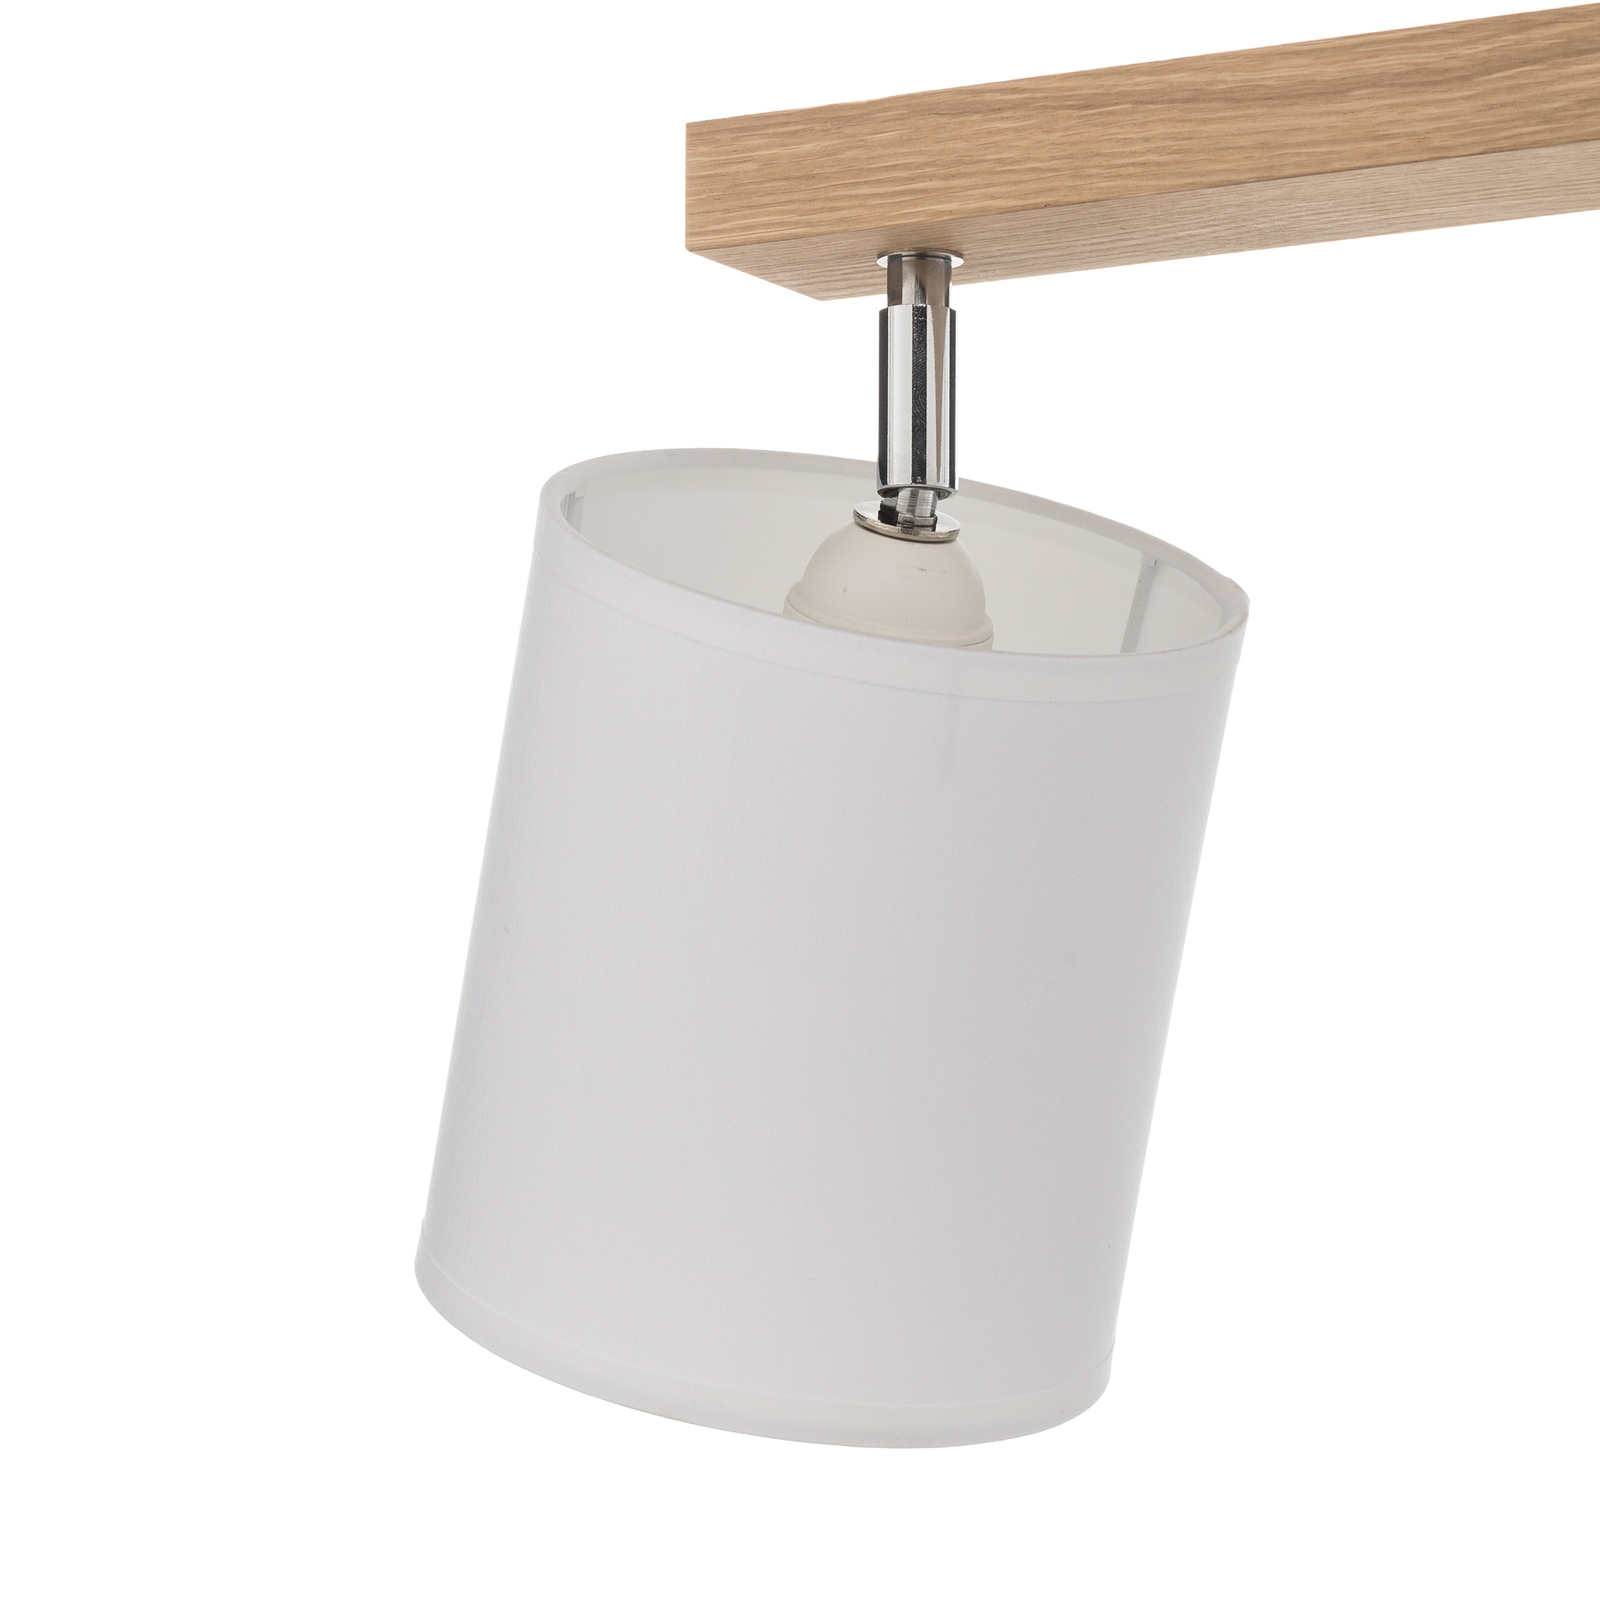 Corralee downlight, white, 2-bulb